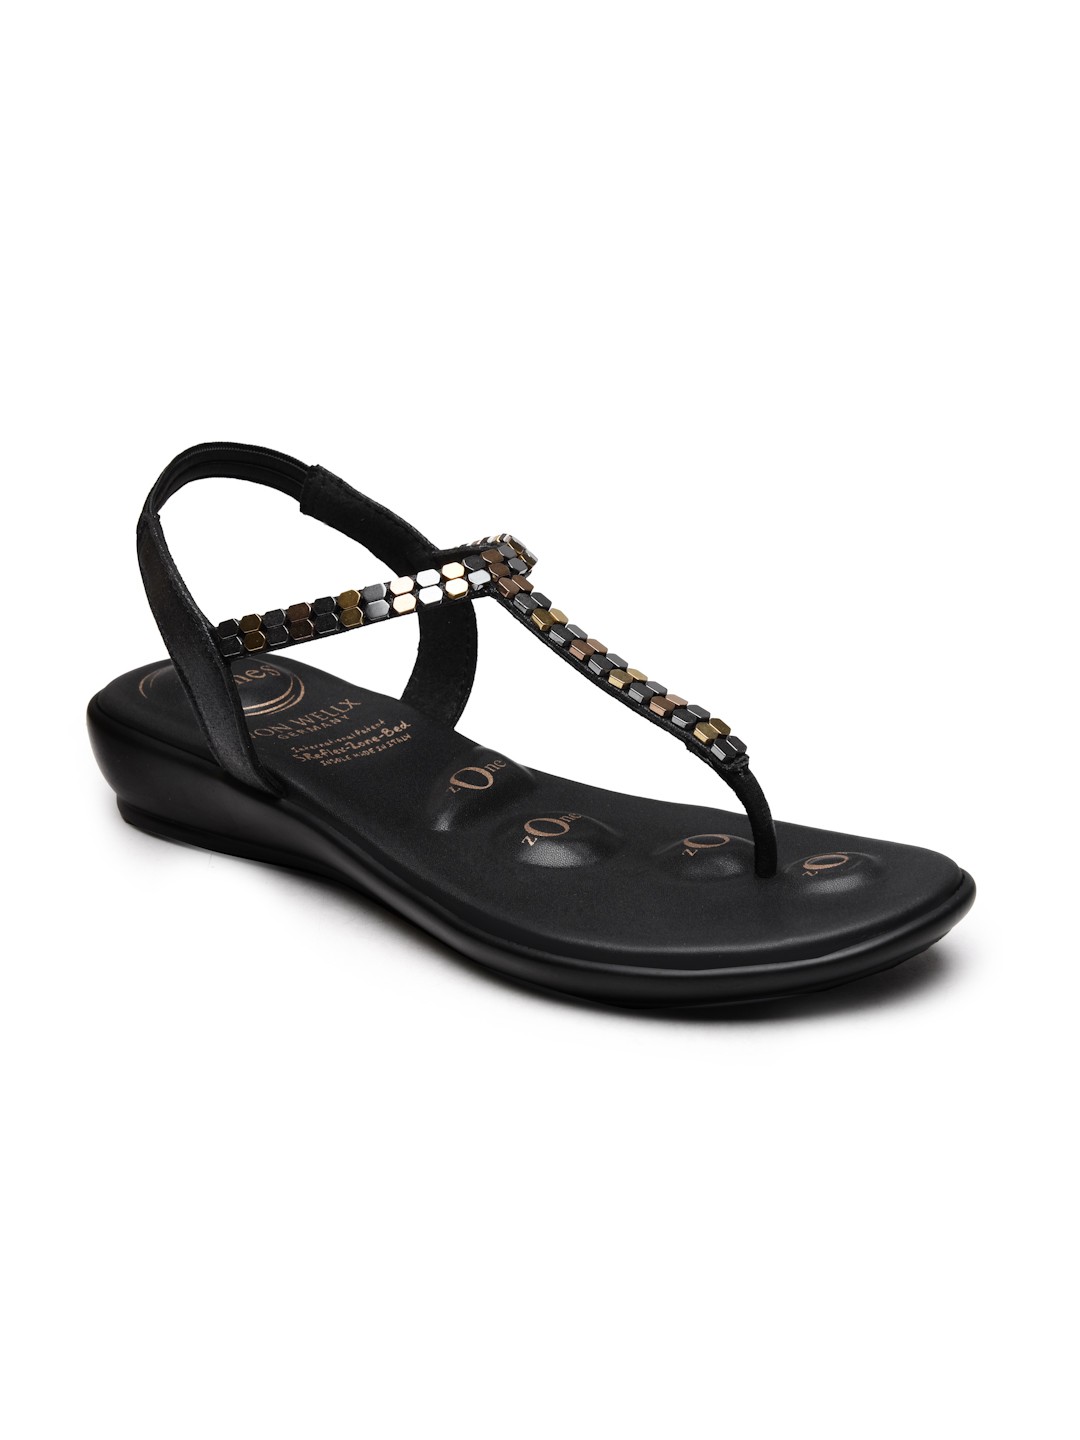 Buy Von Wellx Germany Comfort Women's Black Casual Sandals Regina Online in Dammam